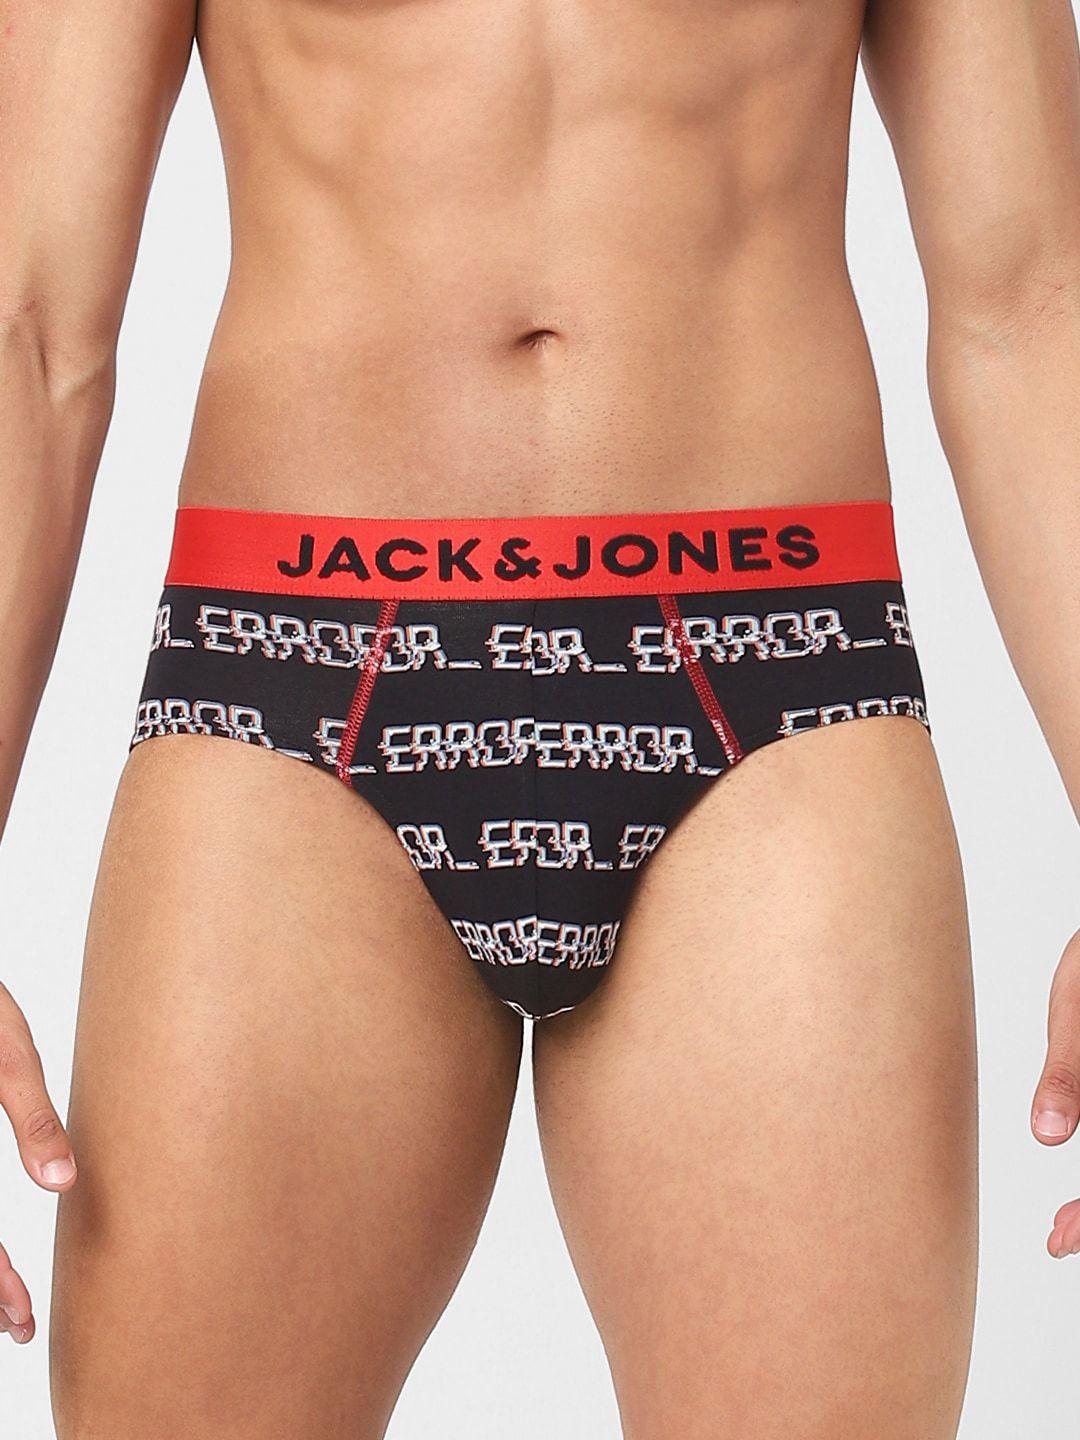 jack & jones men black & red printed cotton basic briefs 116793001